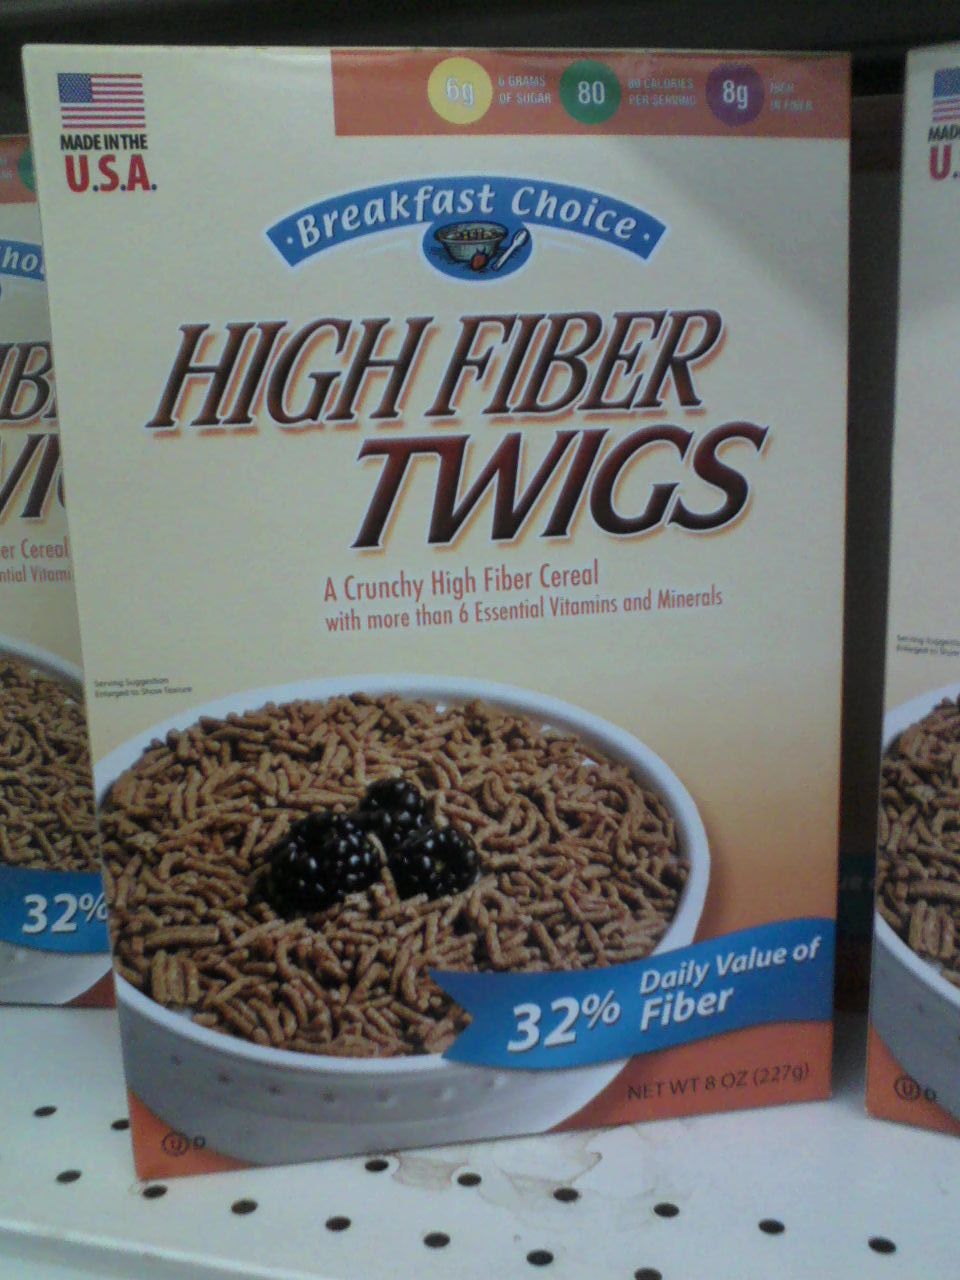 High fiber twigs.jpg